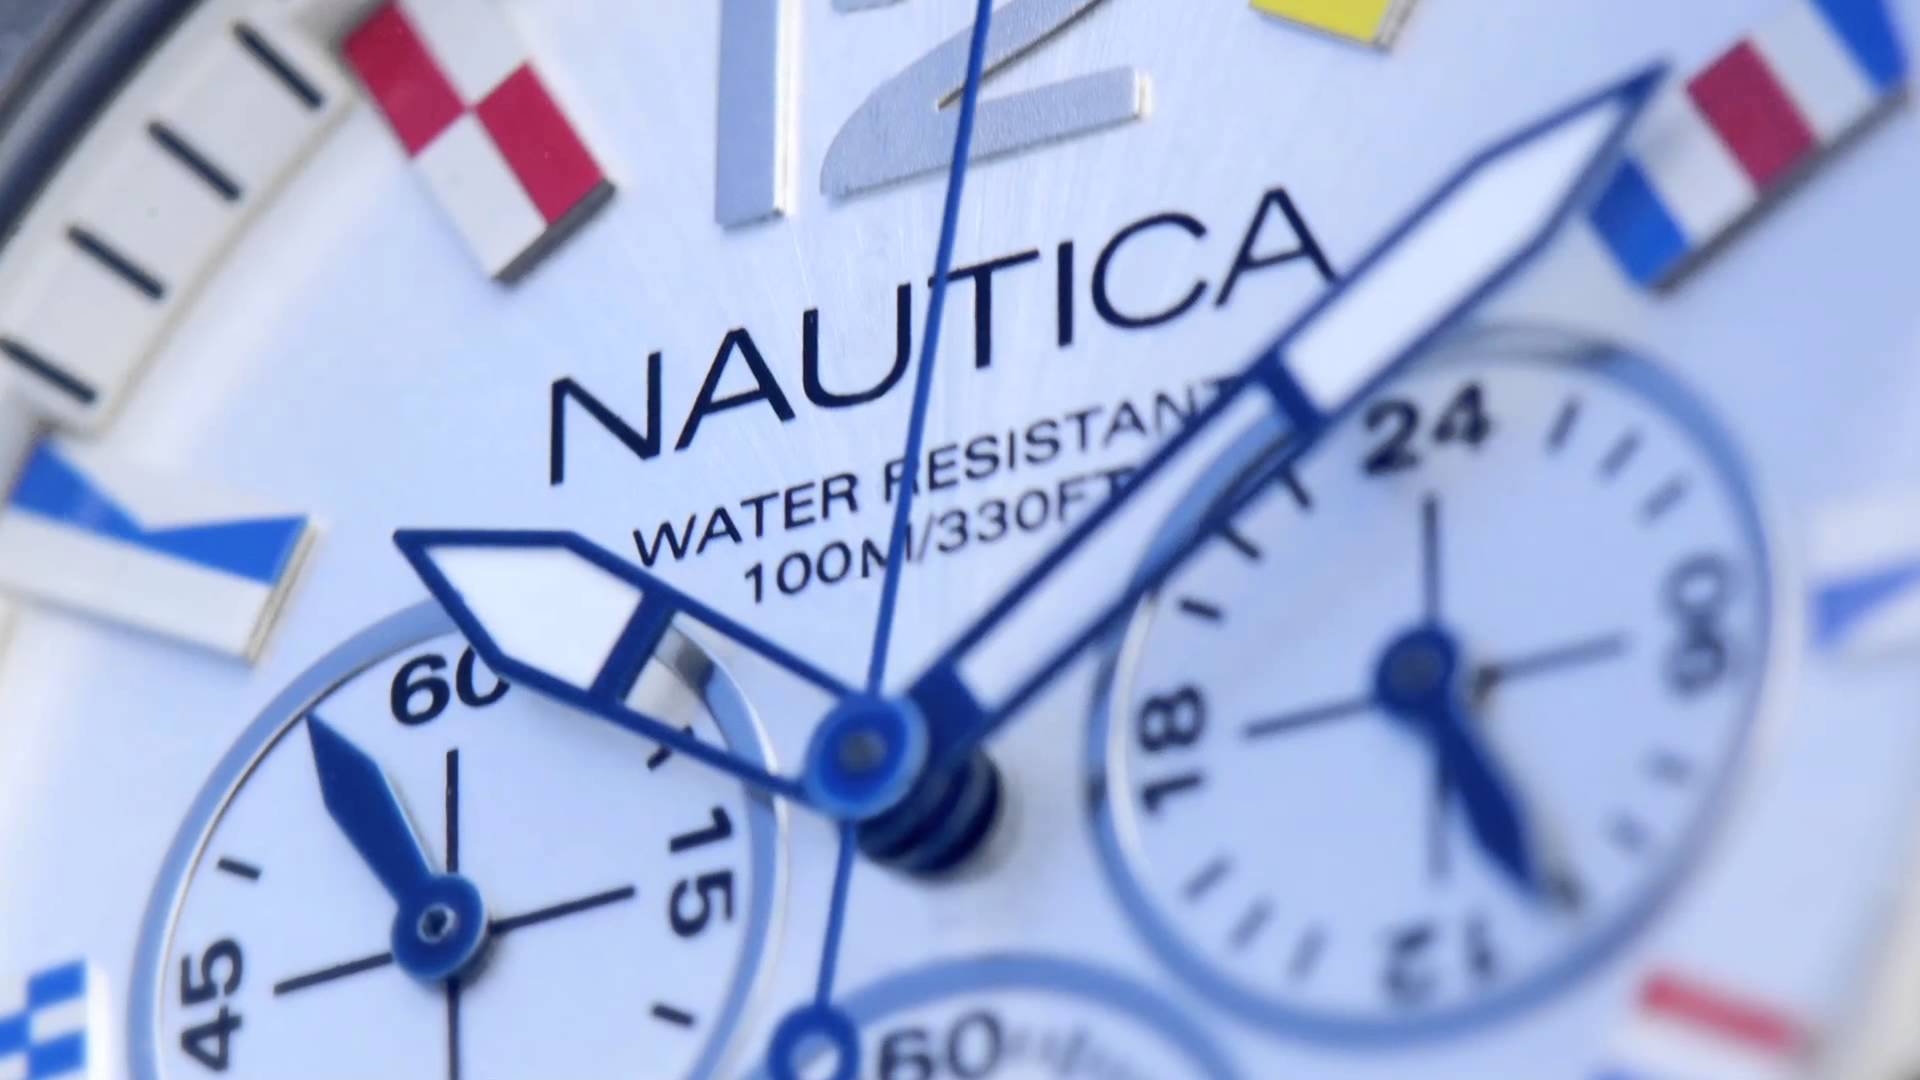 Download Nautica Wallpaper Gallery